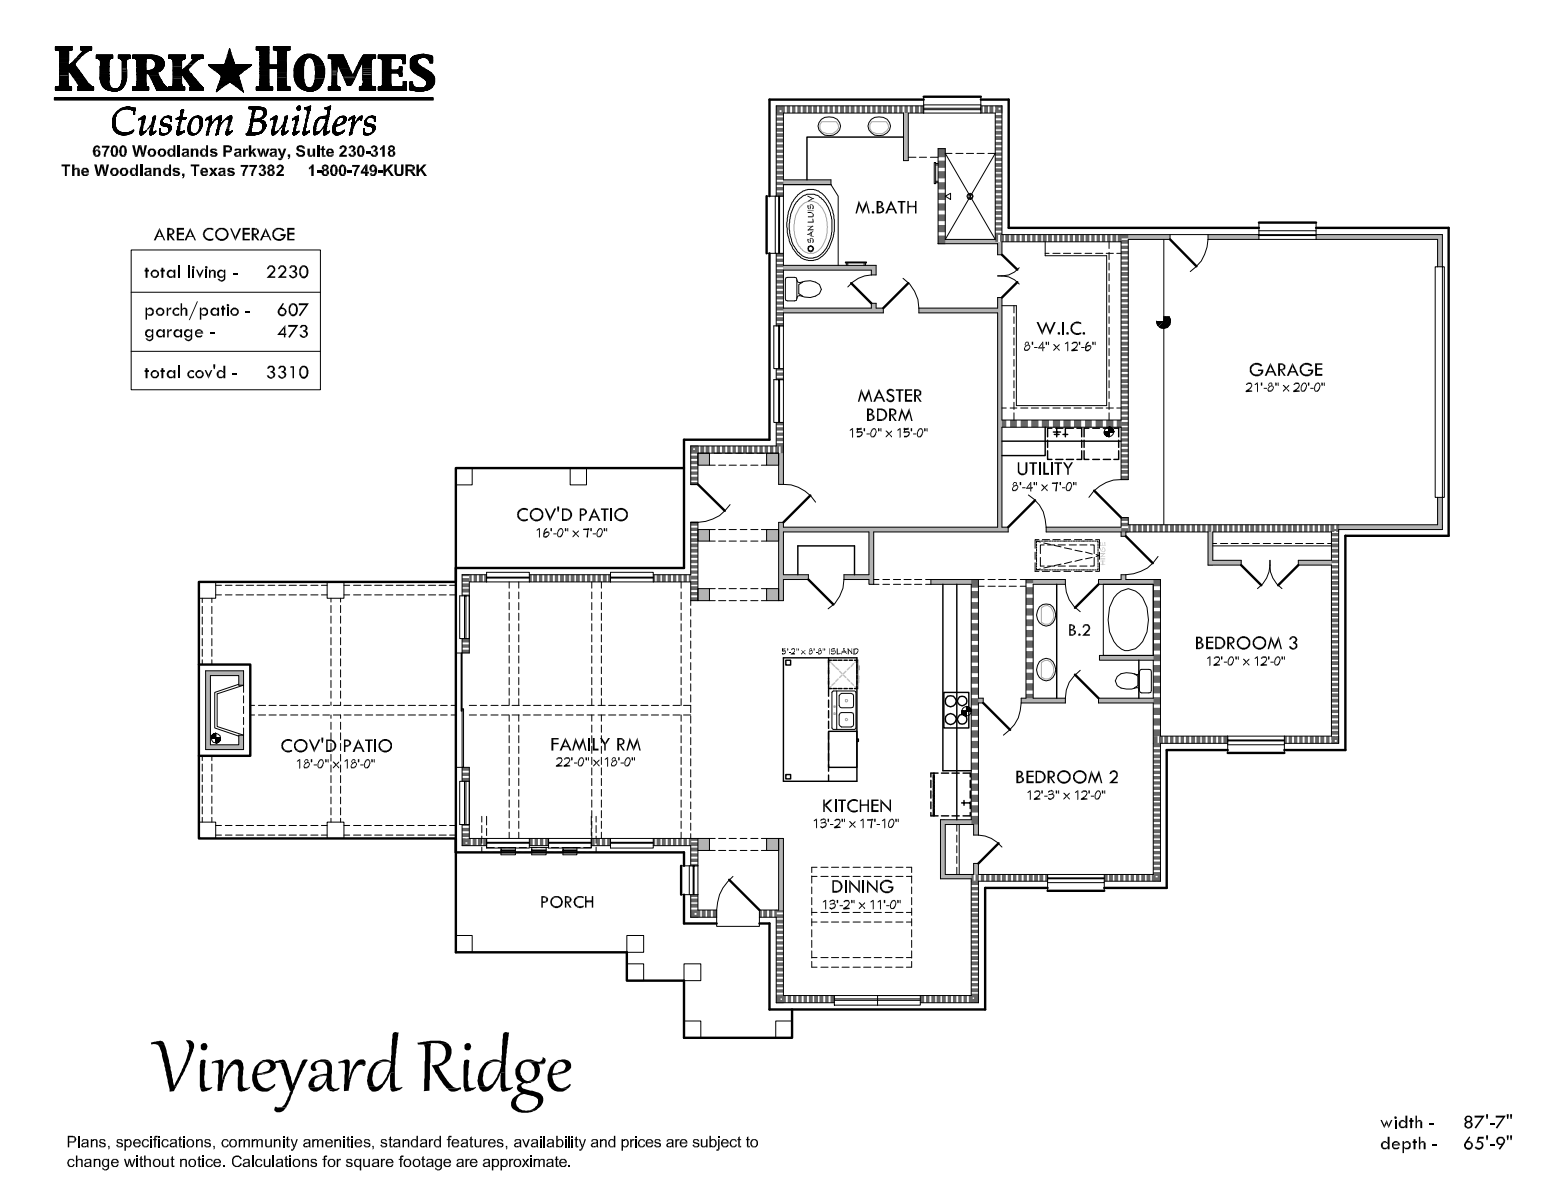 The Vineyard Ridge - Home Plan Design